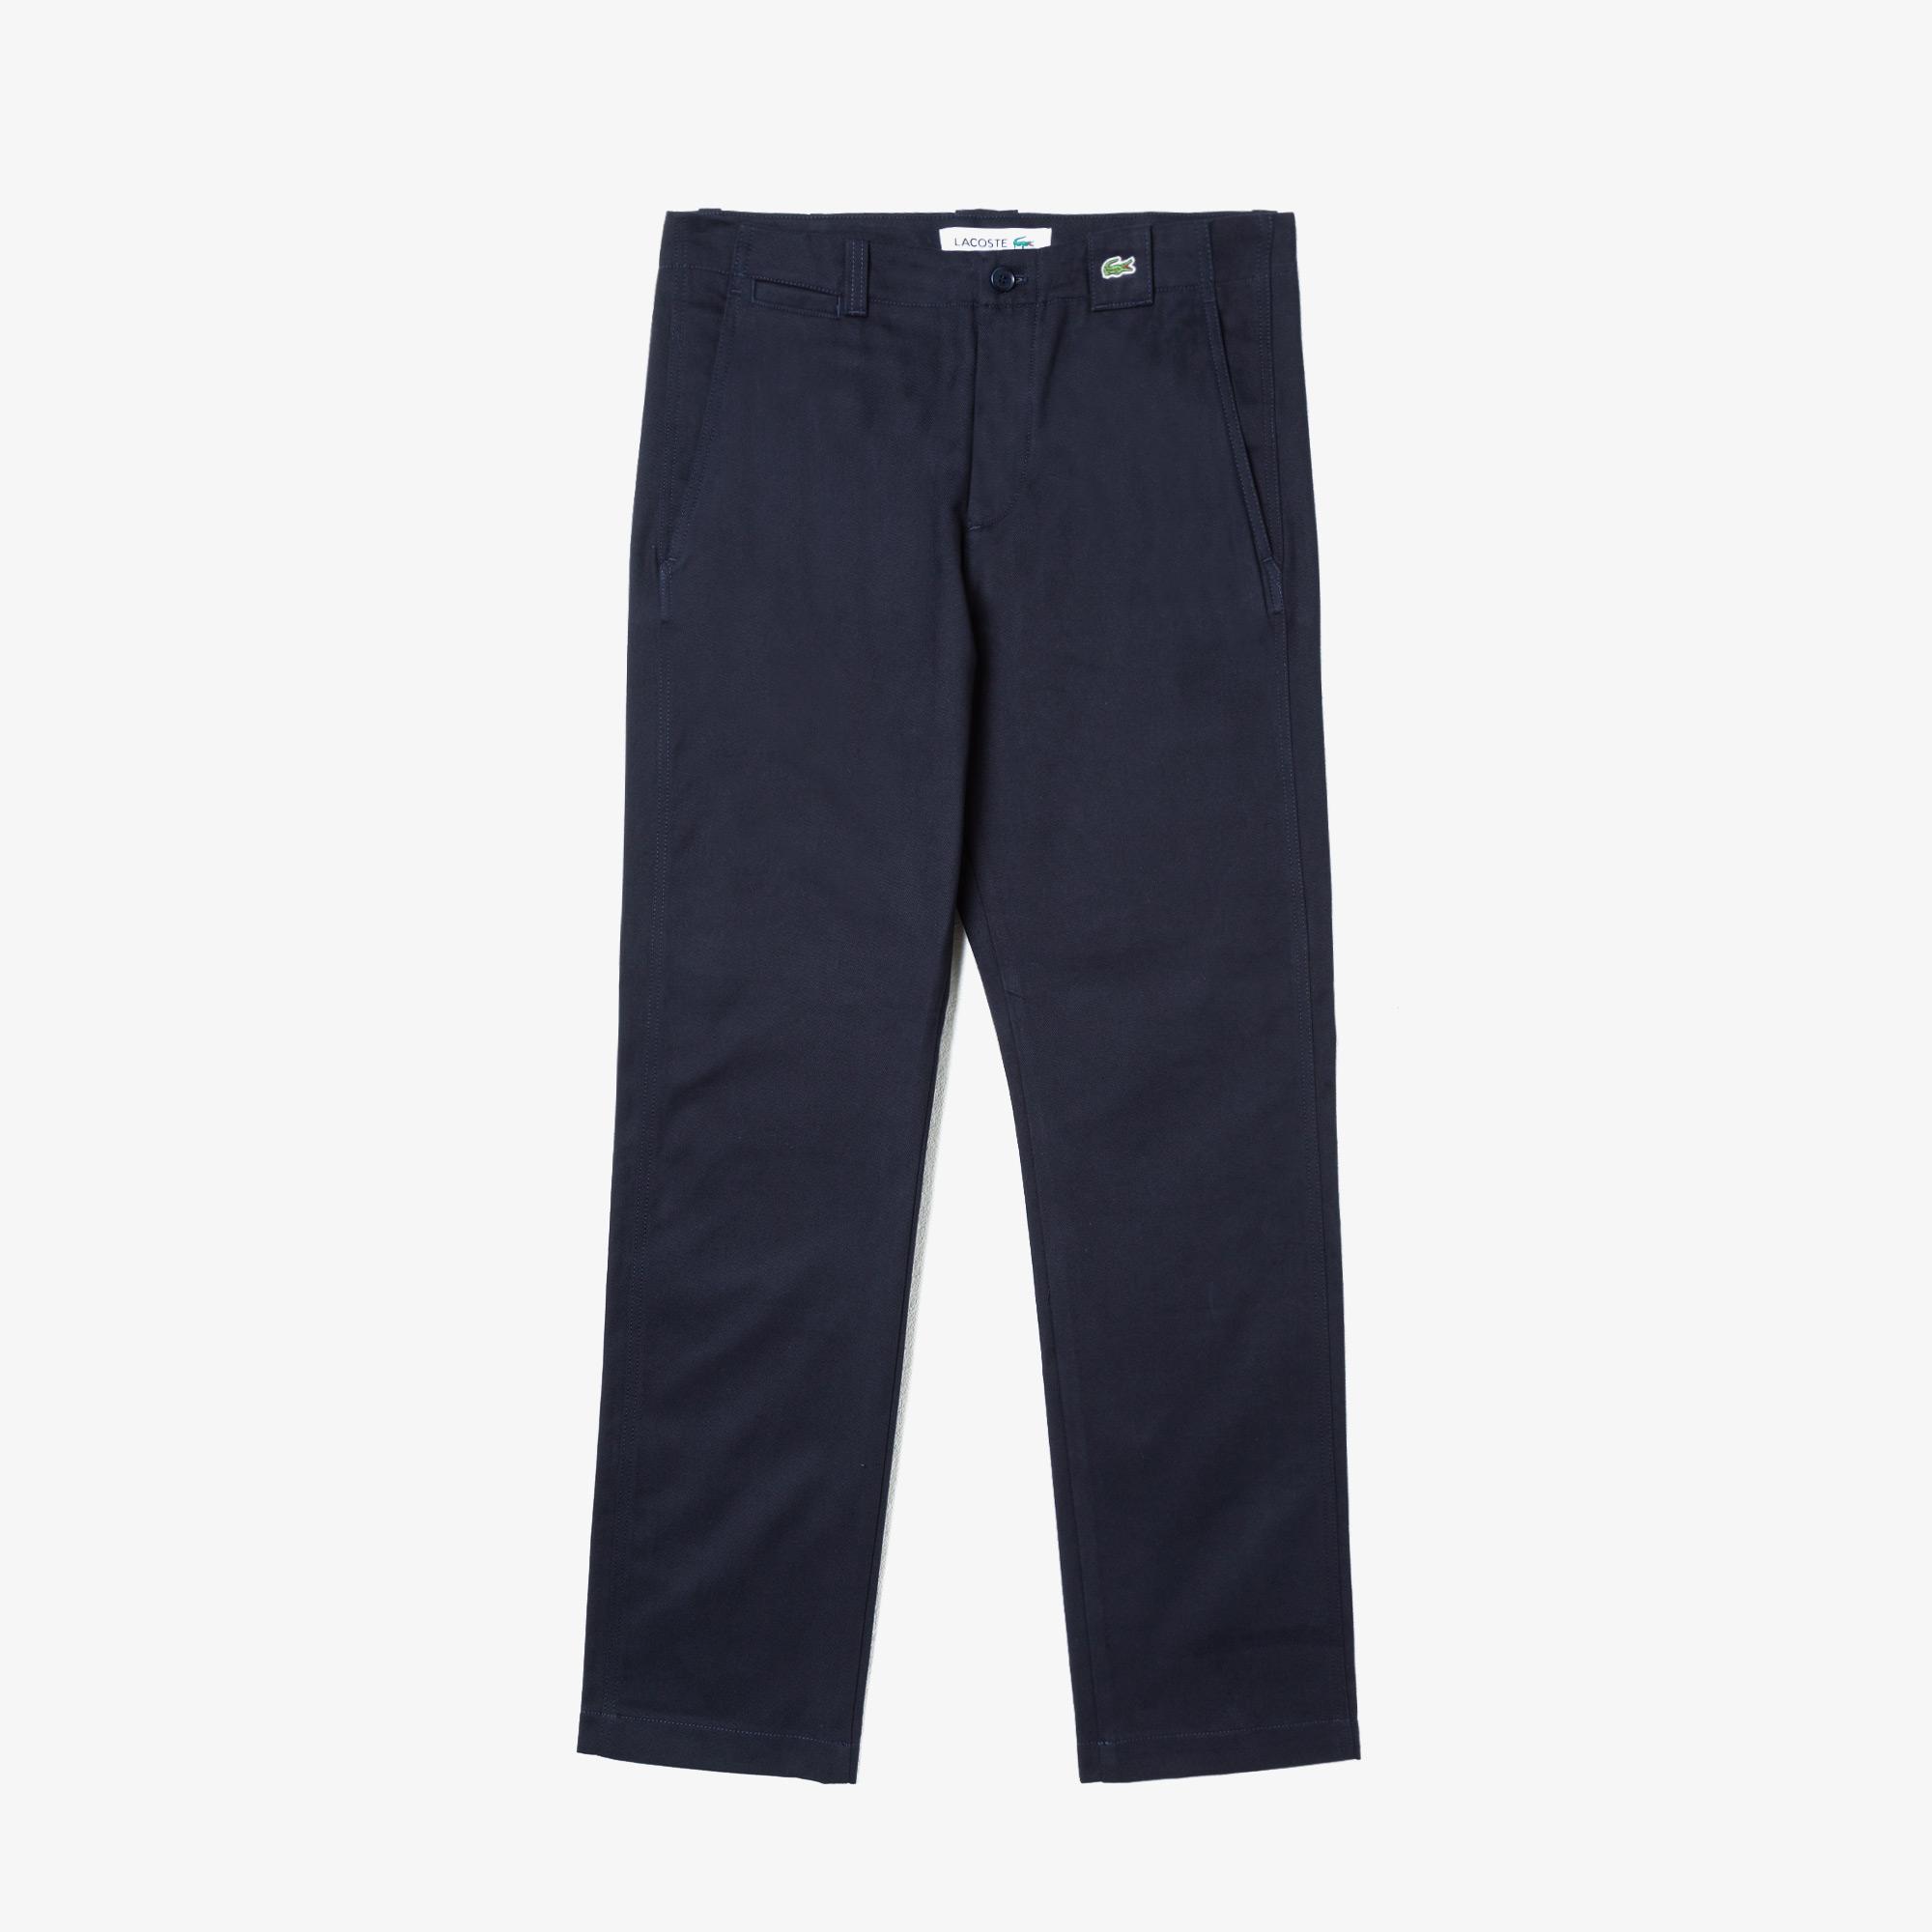 Lacoste Men’s Regular Fit Cotton Chino Pants